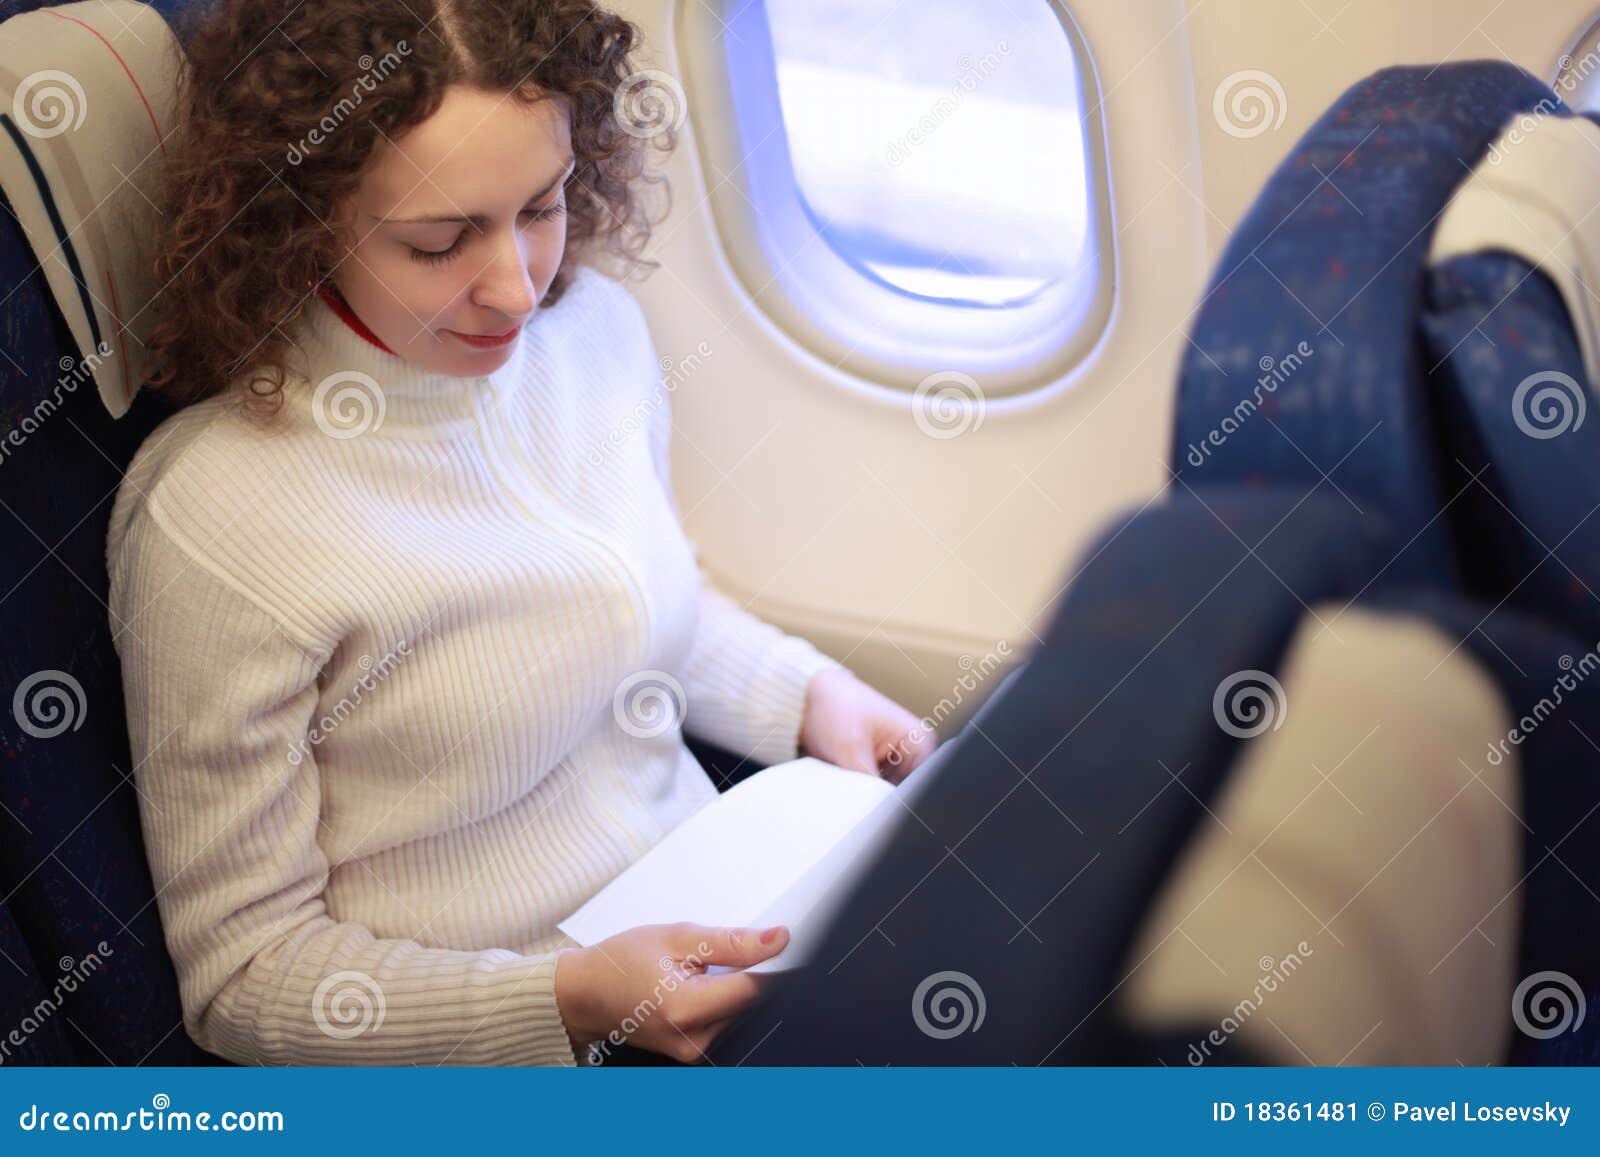 woman sits in chair near illuminator of airplane